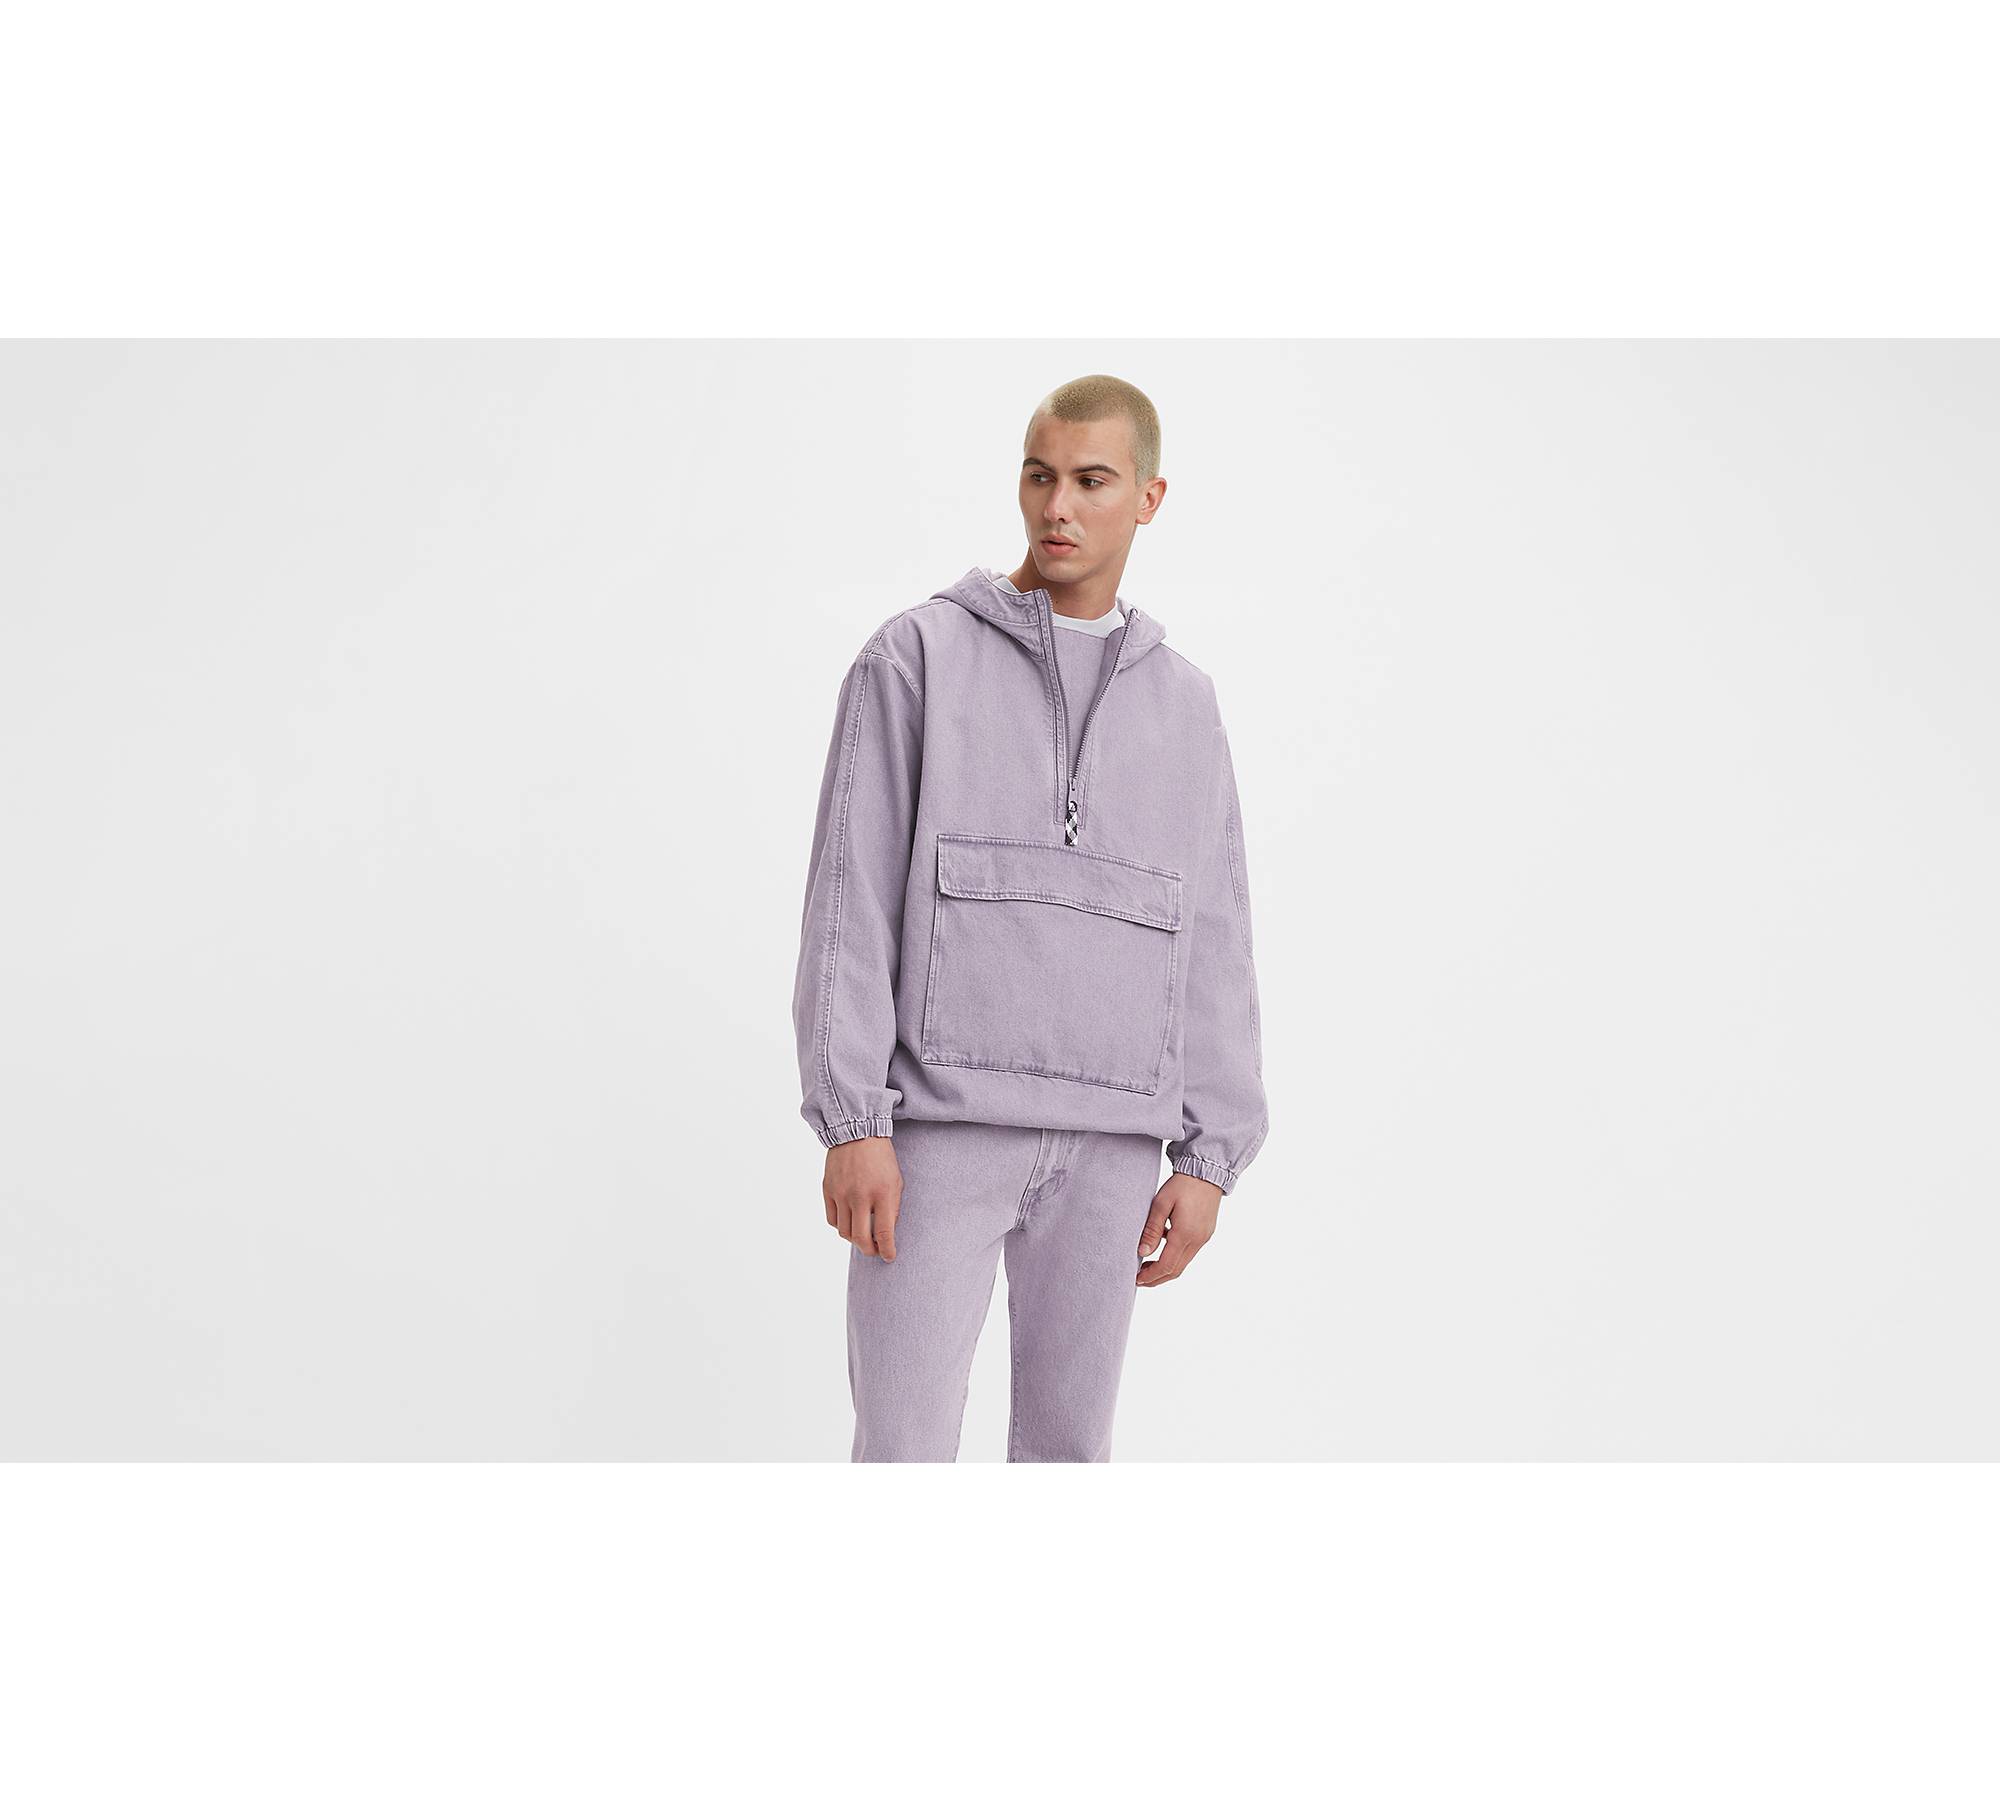 bershka purple denim jacket size S